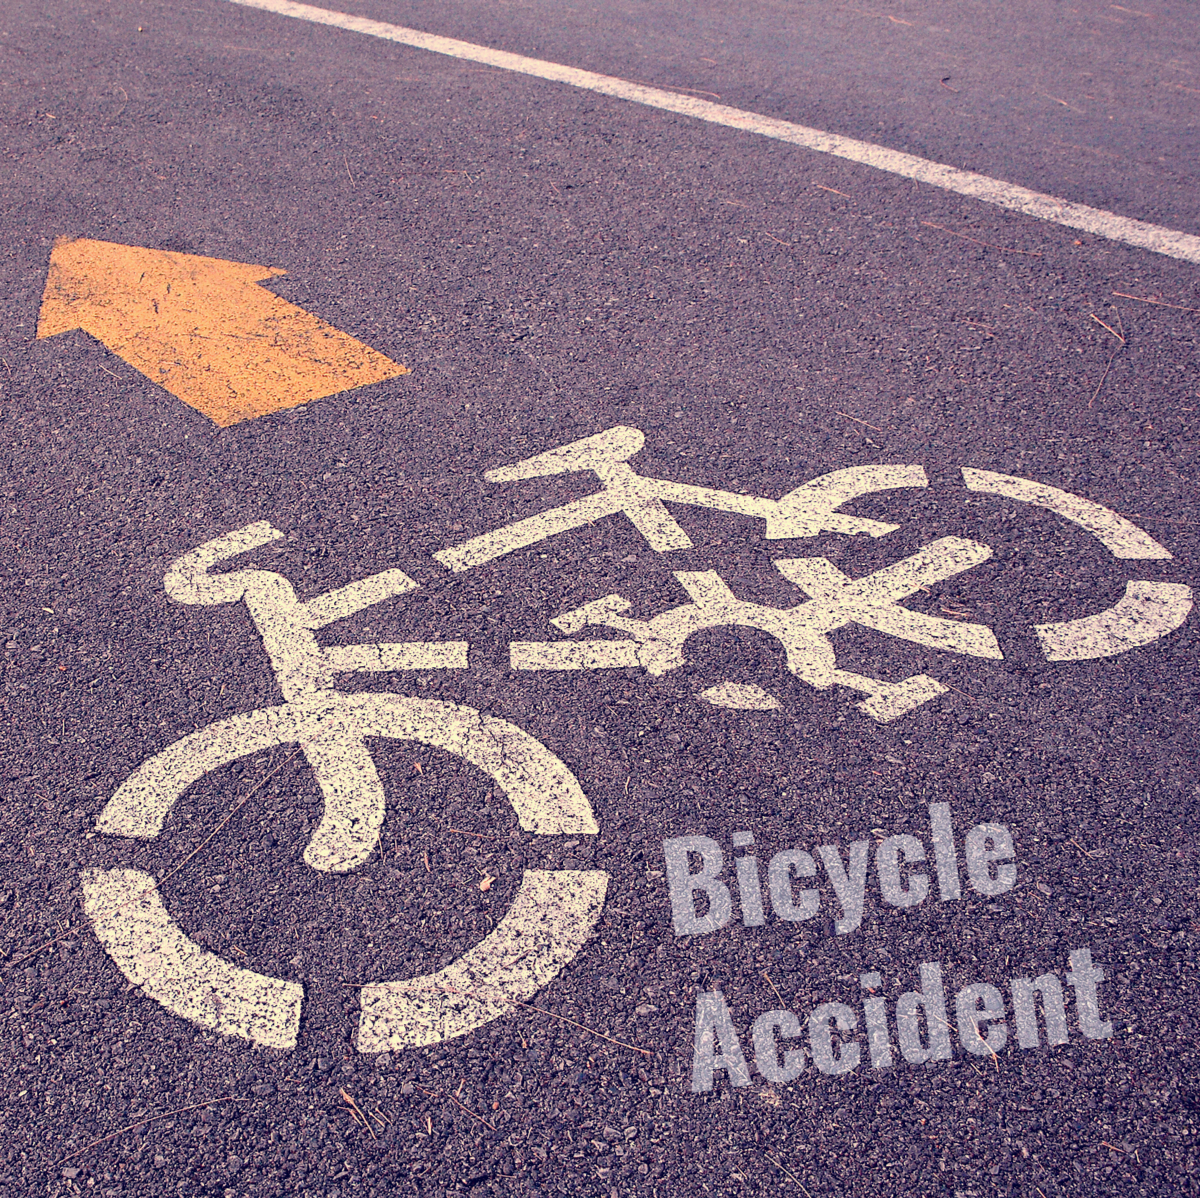 San Jacinto Bicycle Accident Warren Road and Esplanade Avenue